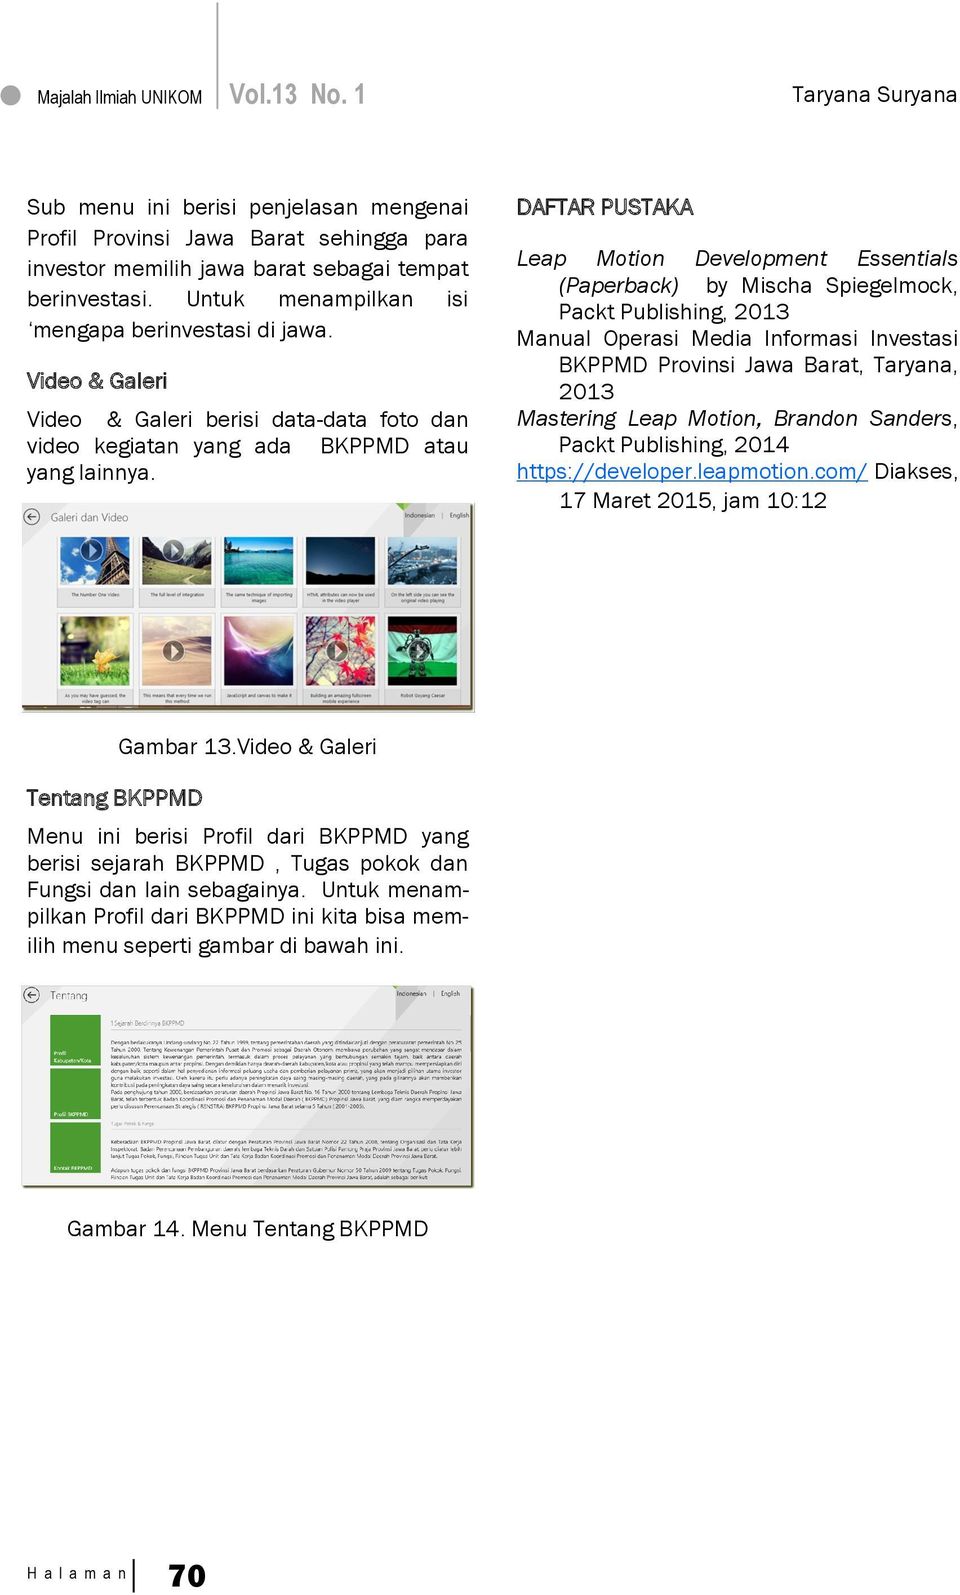 DAFTAR PUSTAKA Leap Motion Development Essentials (Paperback) by Mischa Spiegelmock, Packt Publishing, 2013 Manual Operasi Media Informasi Investasi BKPPMD Provinsi Jawa Barat, Taryana, 2013